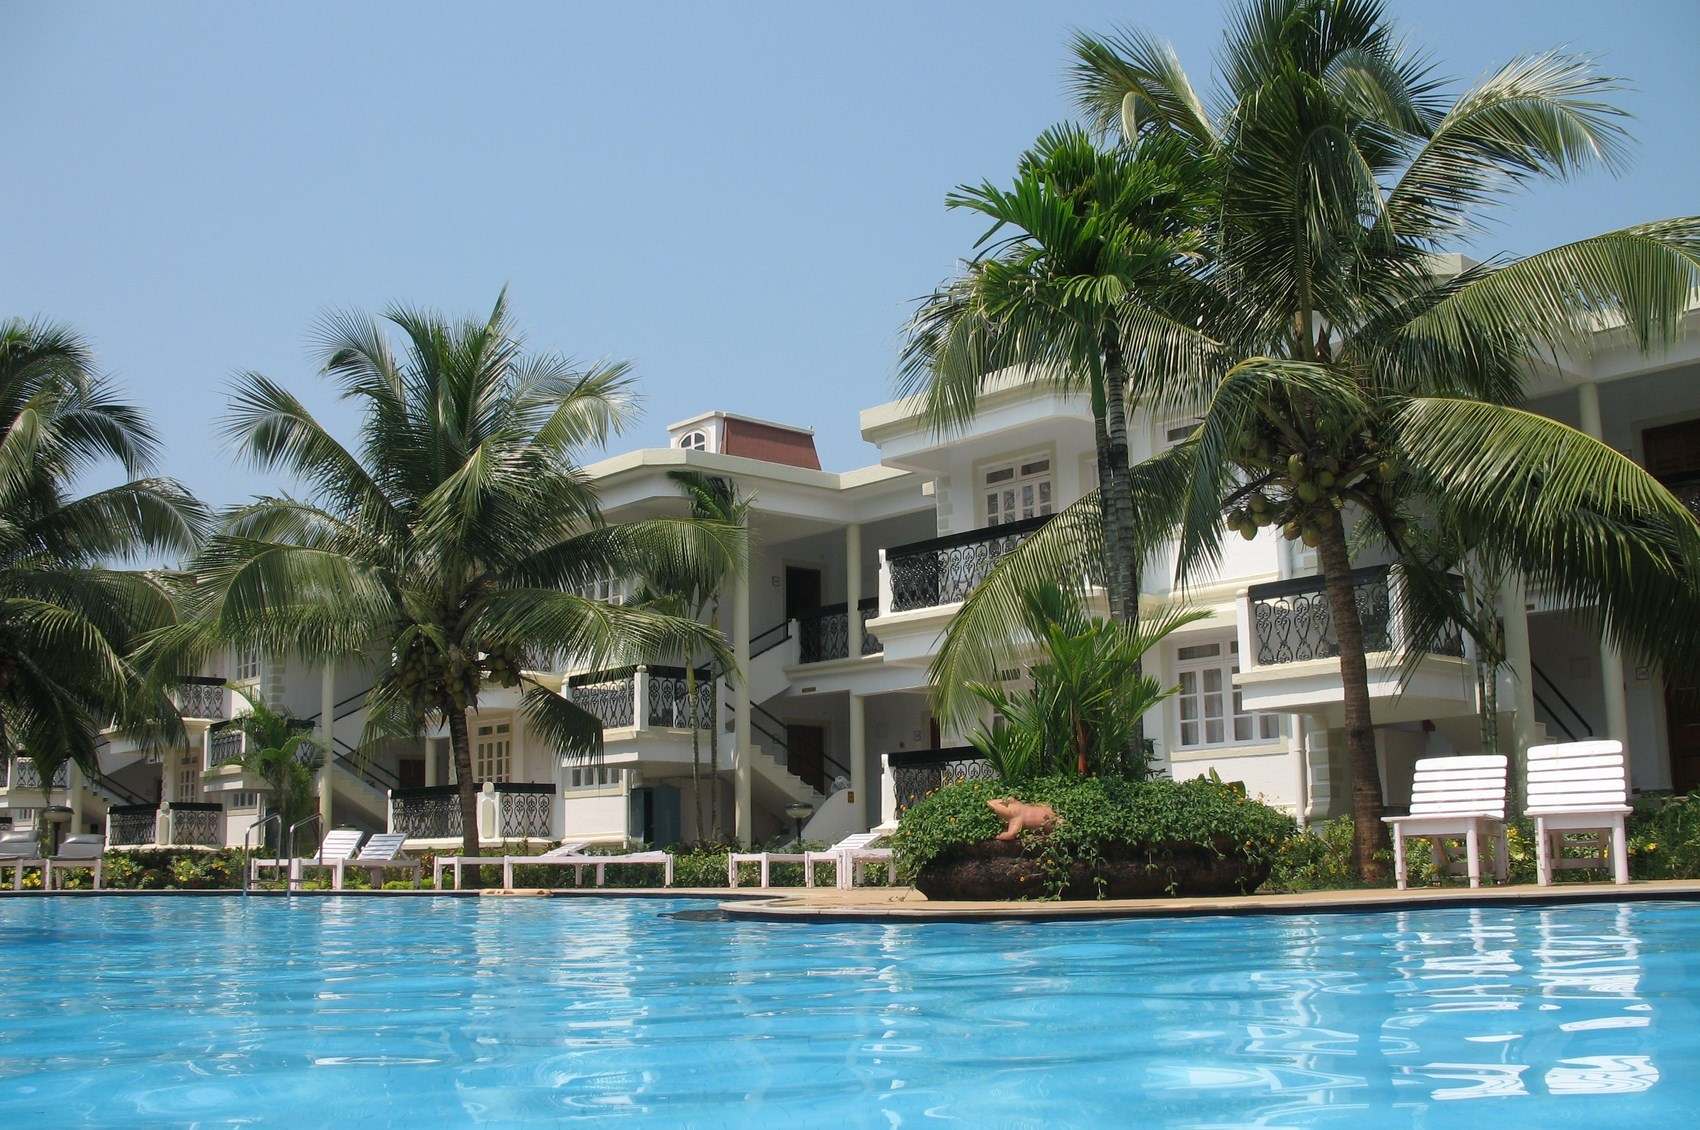 Best Hotel Stay in Goa near Beaches